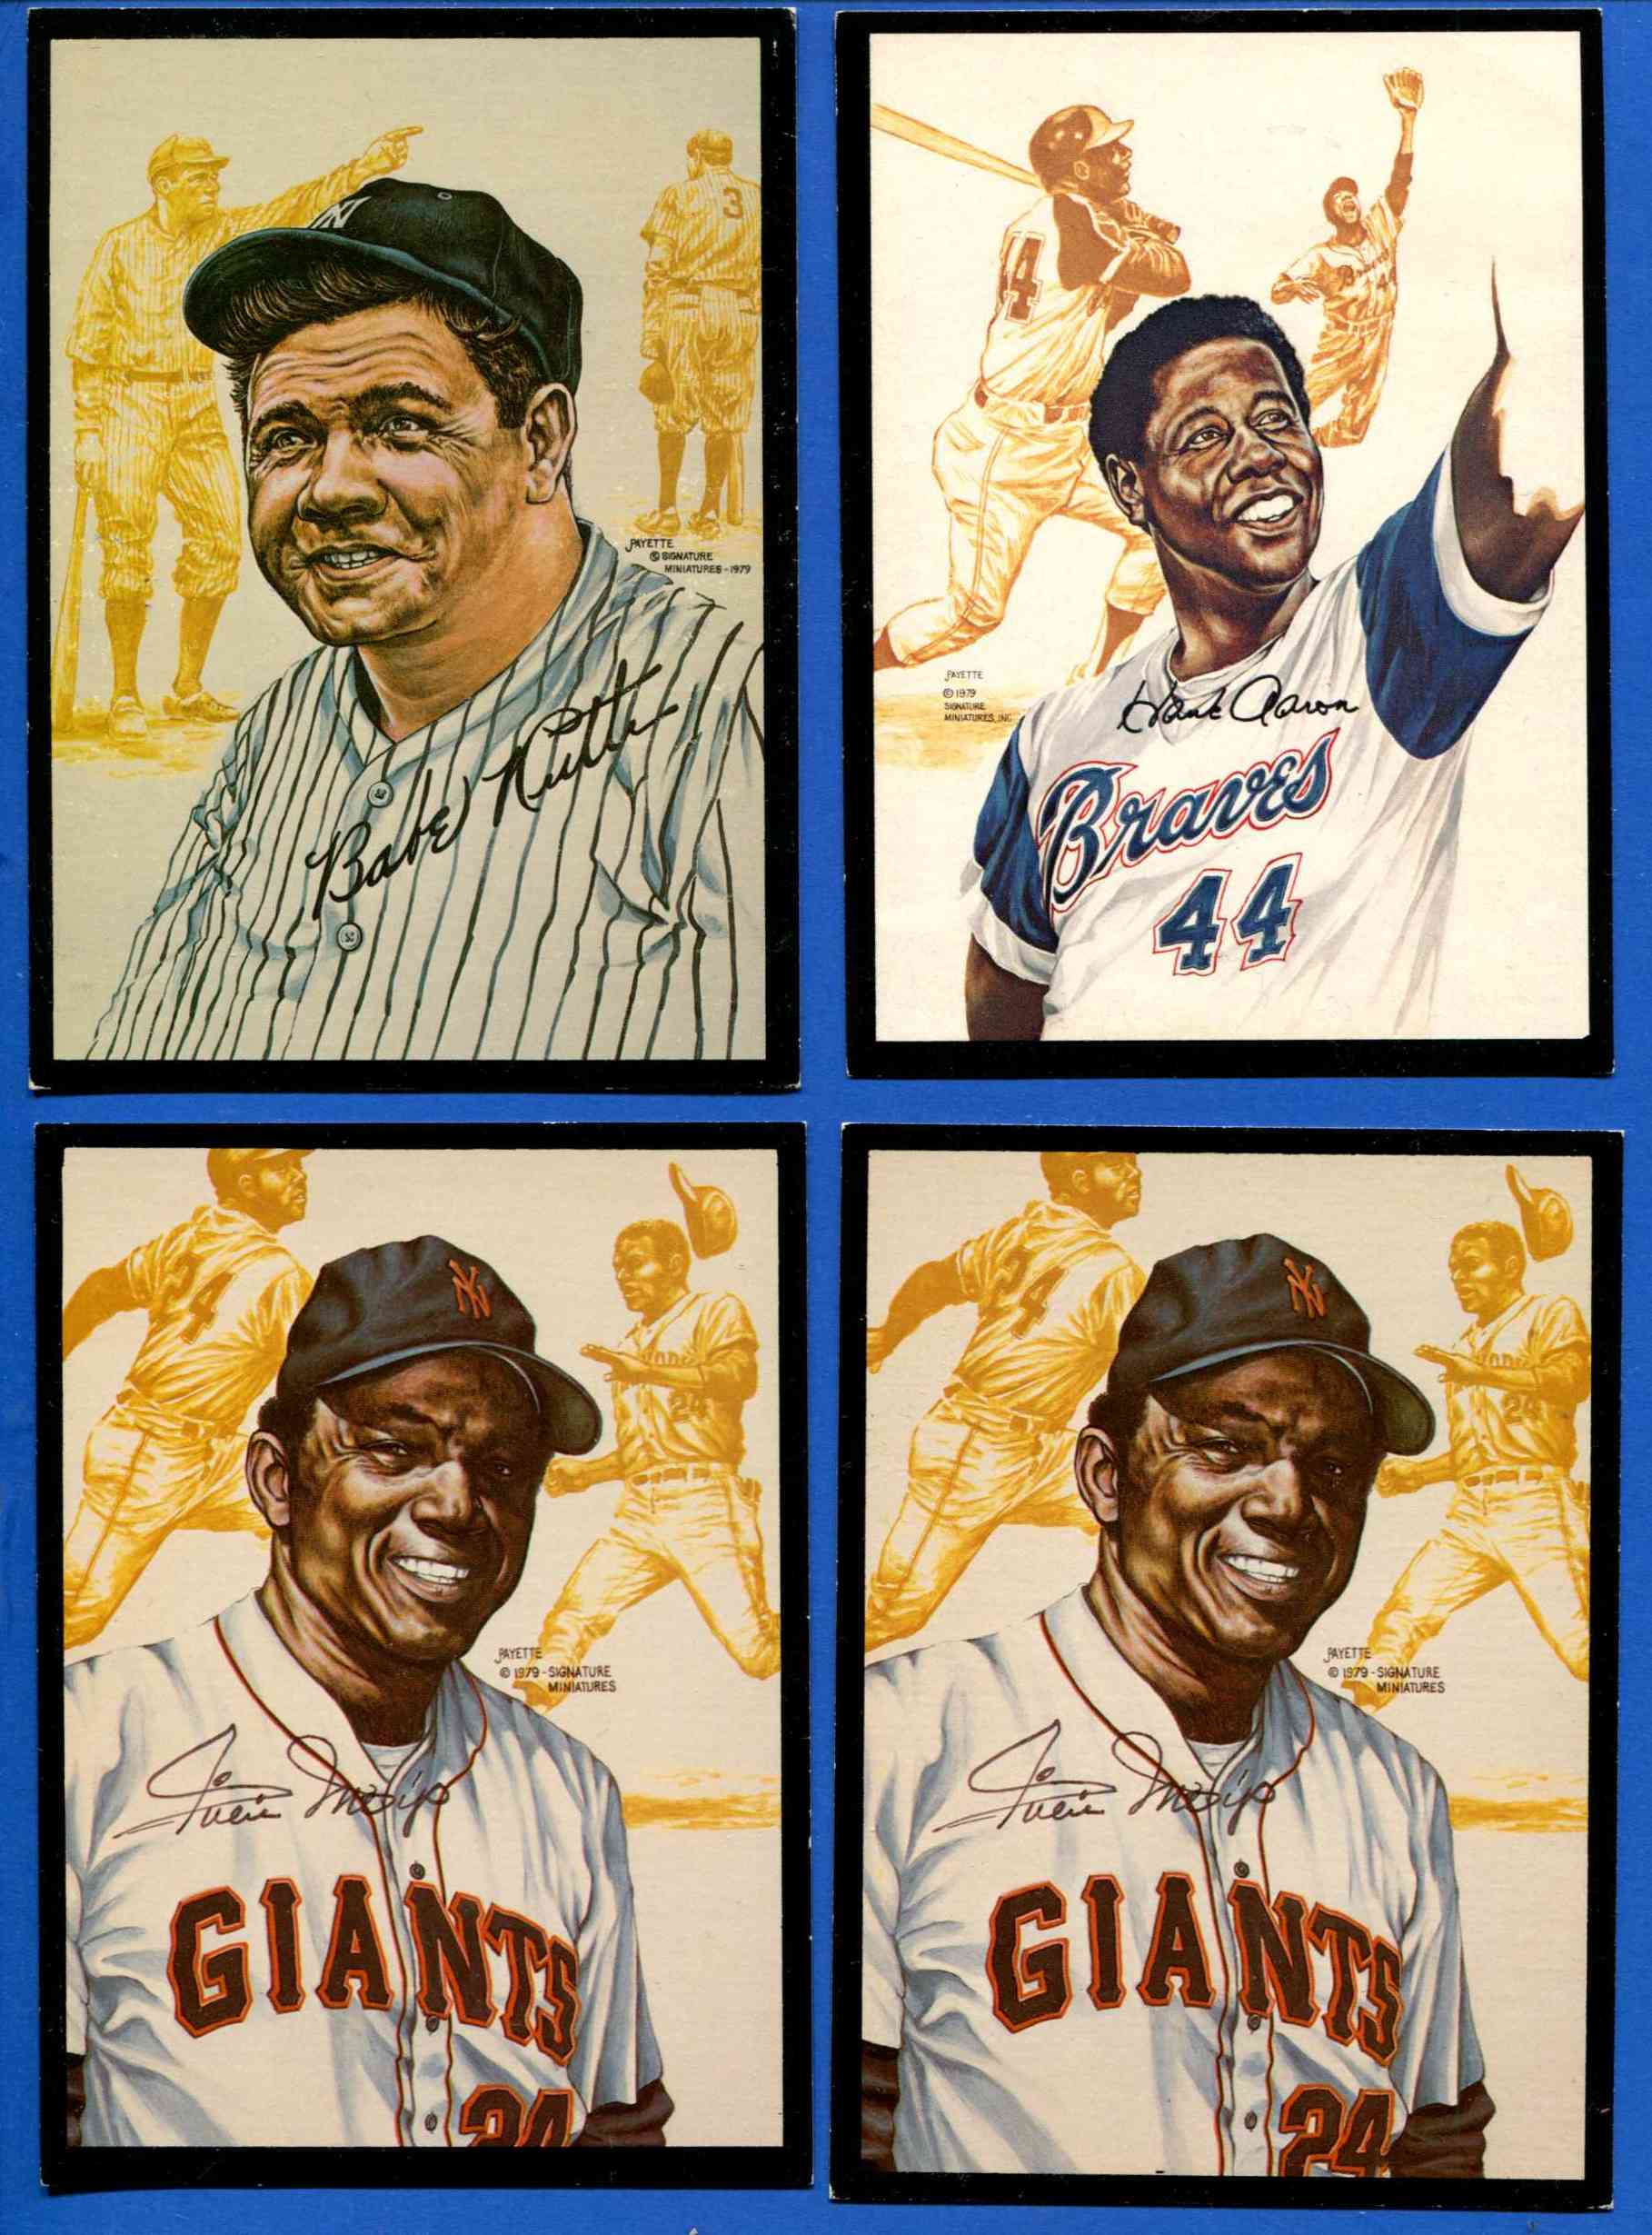 1979 Signature Miniatures ART CARD - WILLIE MAYS (Giants) Baseball cards value